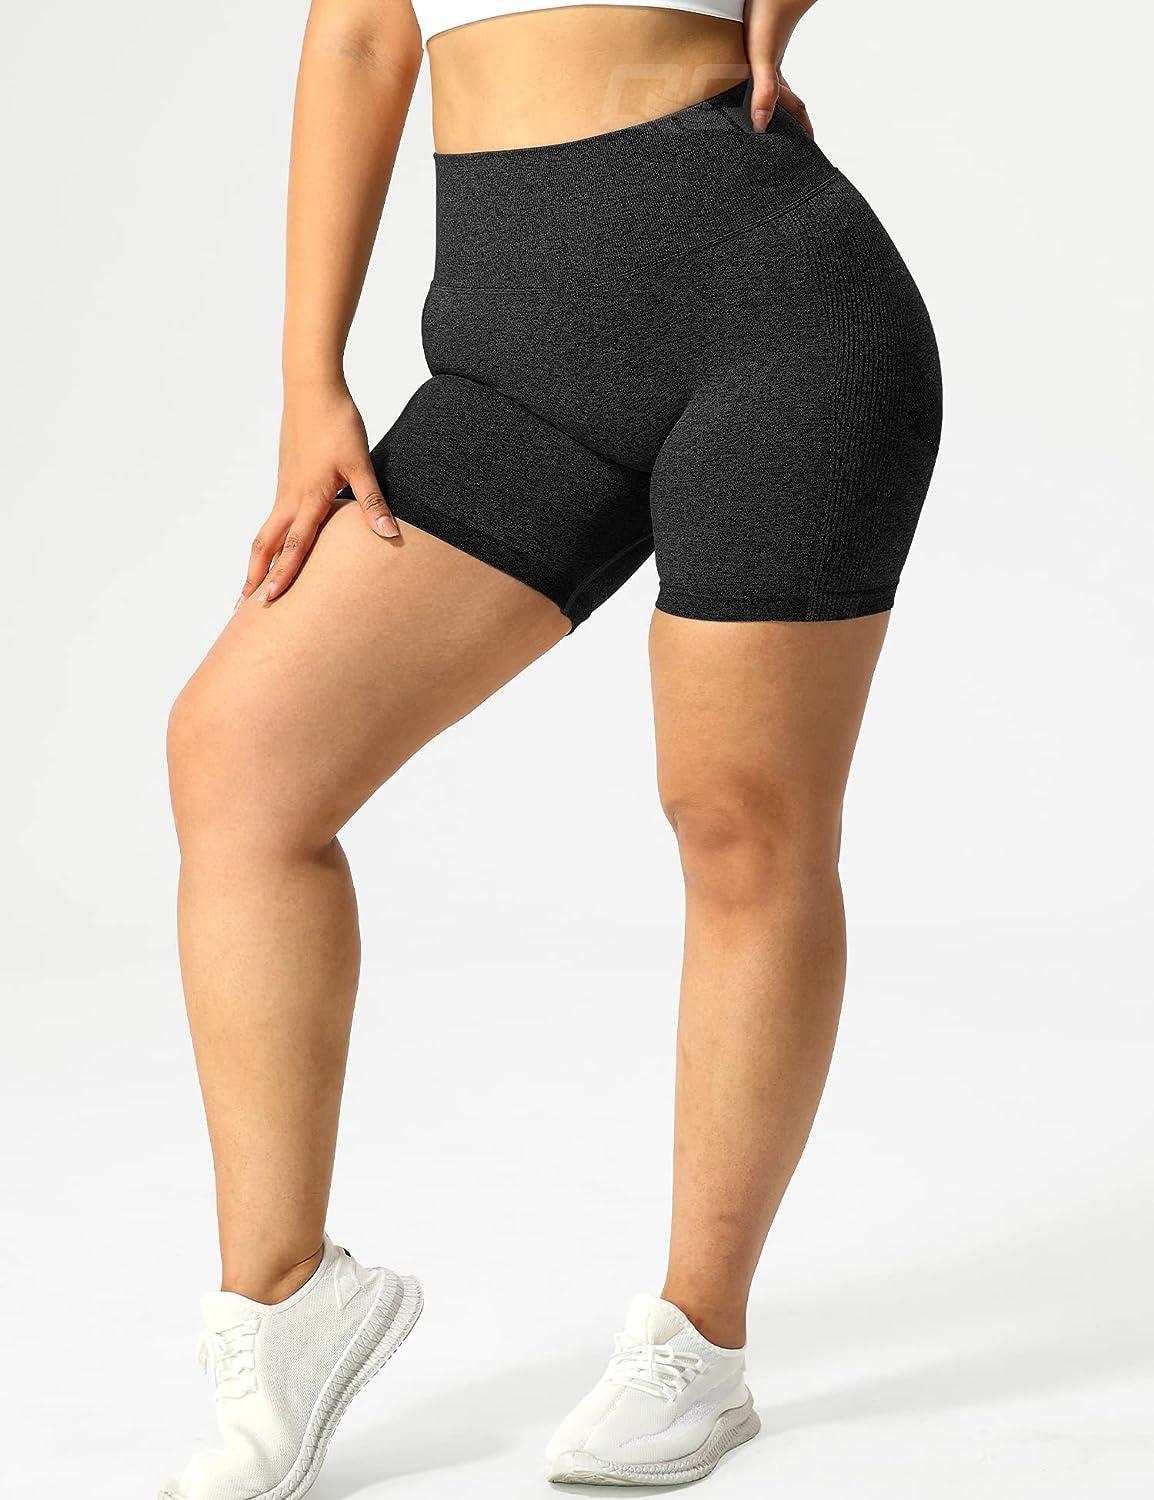 TNNZEET 3 Pack Plus Size Biker Shorts for Women – High Waisted Black  Workout Yoga Shorts（2X, 3X, 4X）, Black/ Complexion/ Light Grey,  Small-Medium price in Saudi Arabia,  Saudi Arabia